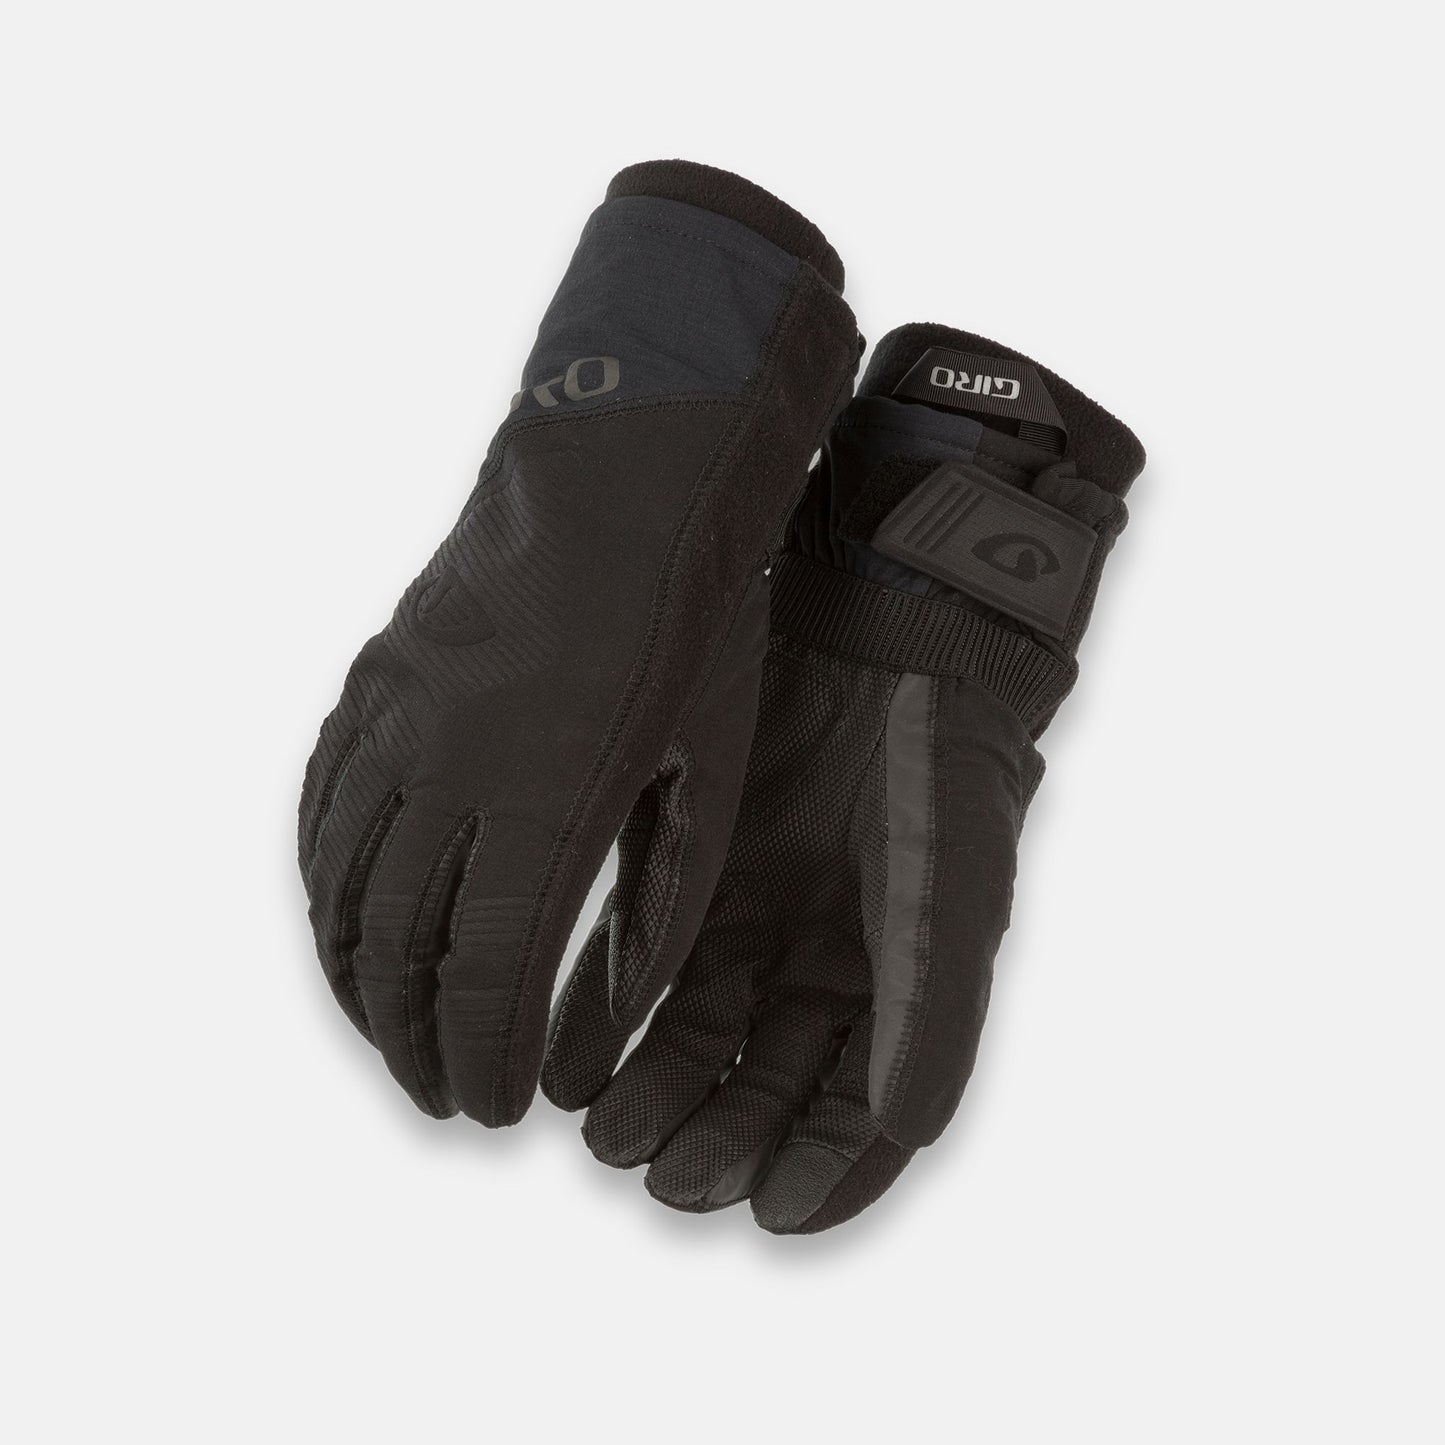 Giro Proof Winter Gloves - Black - Size L